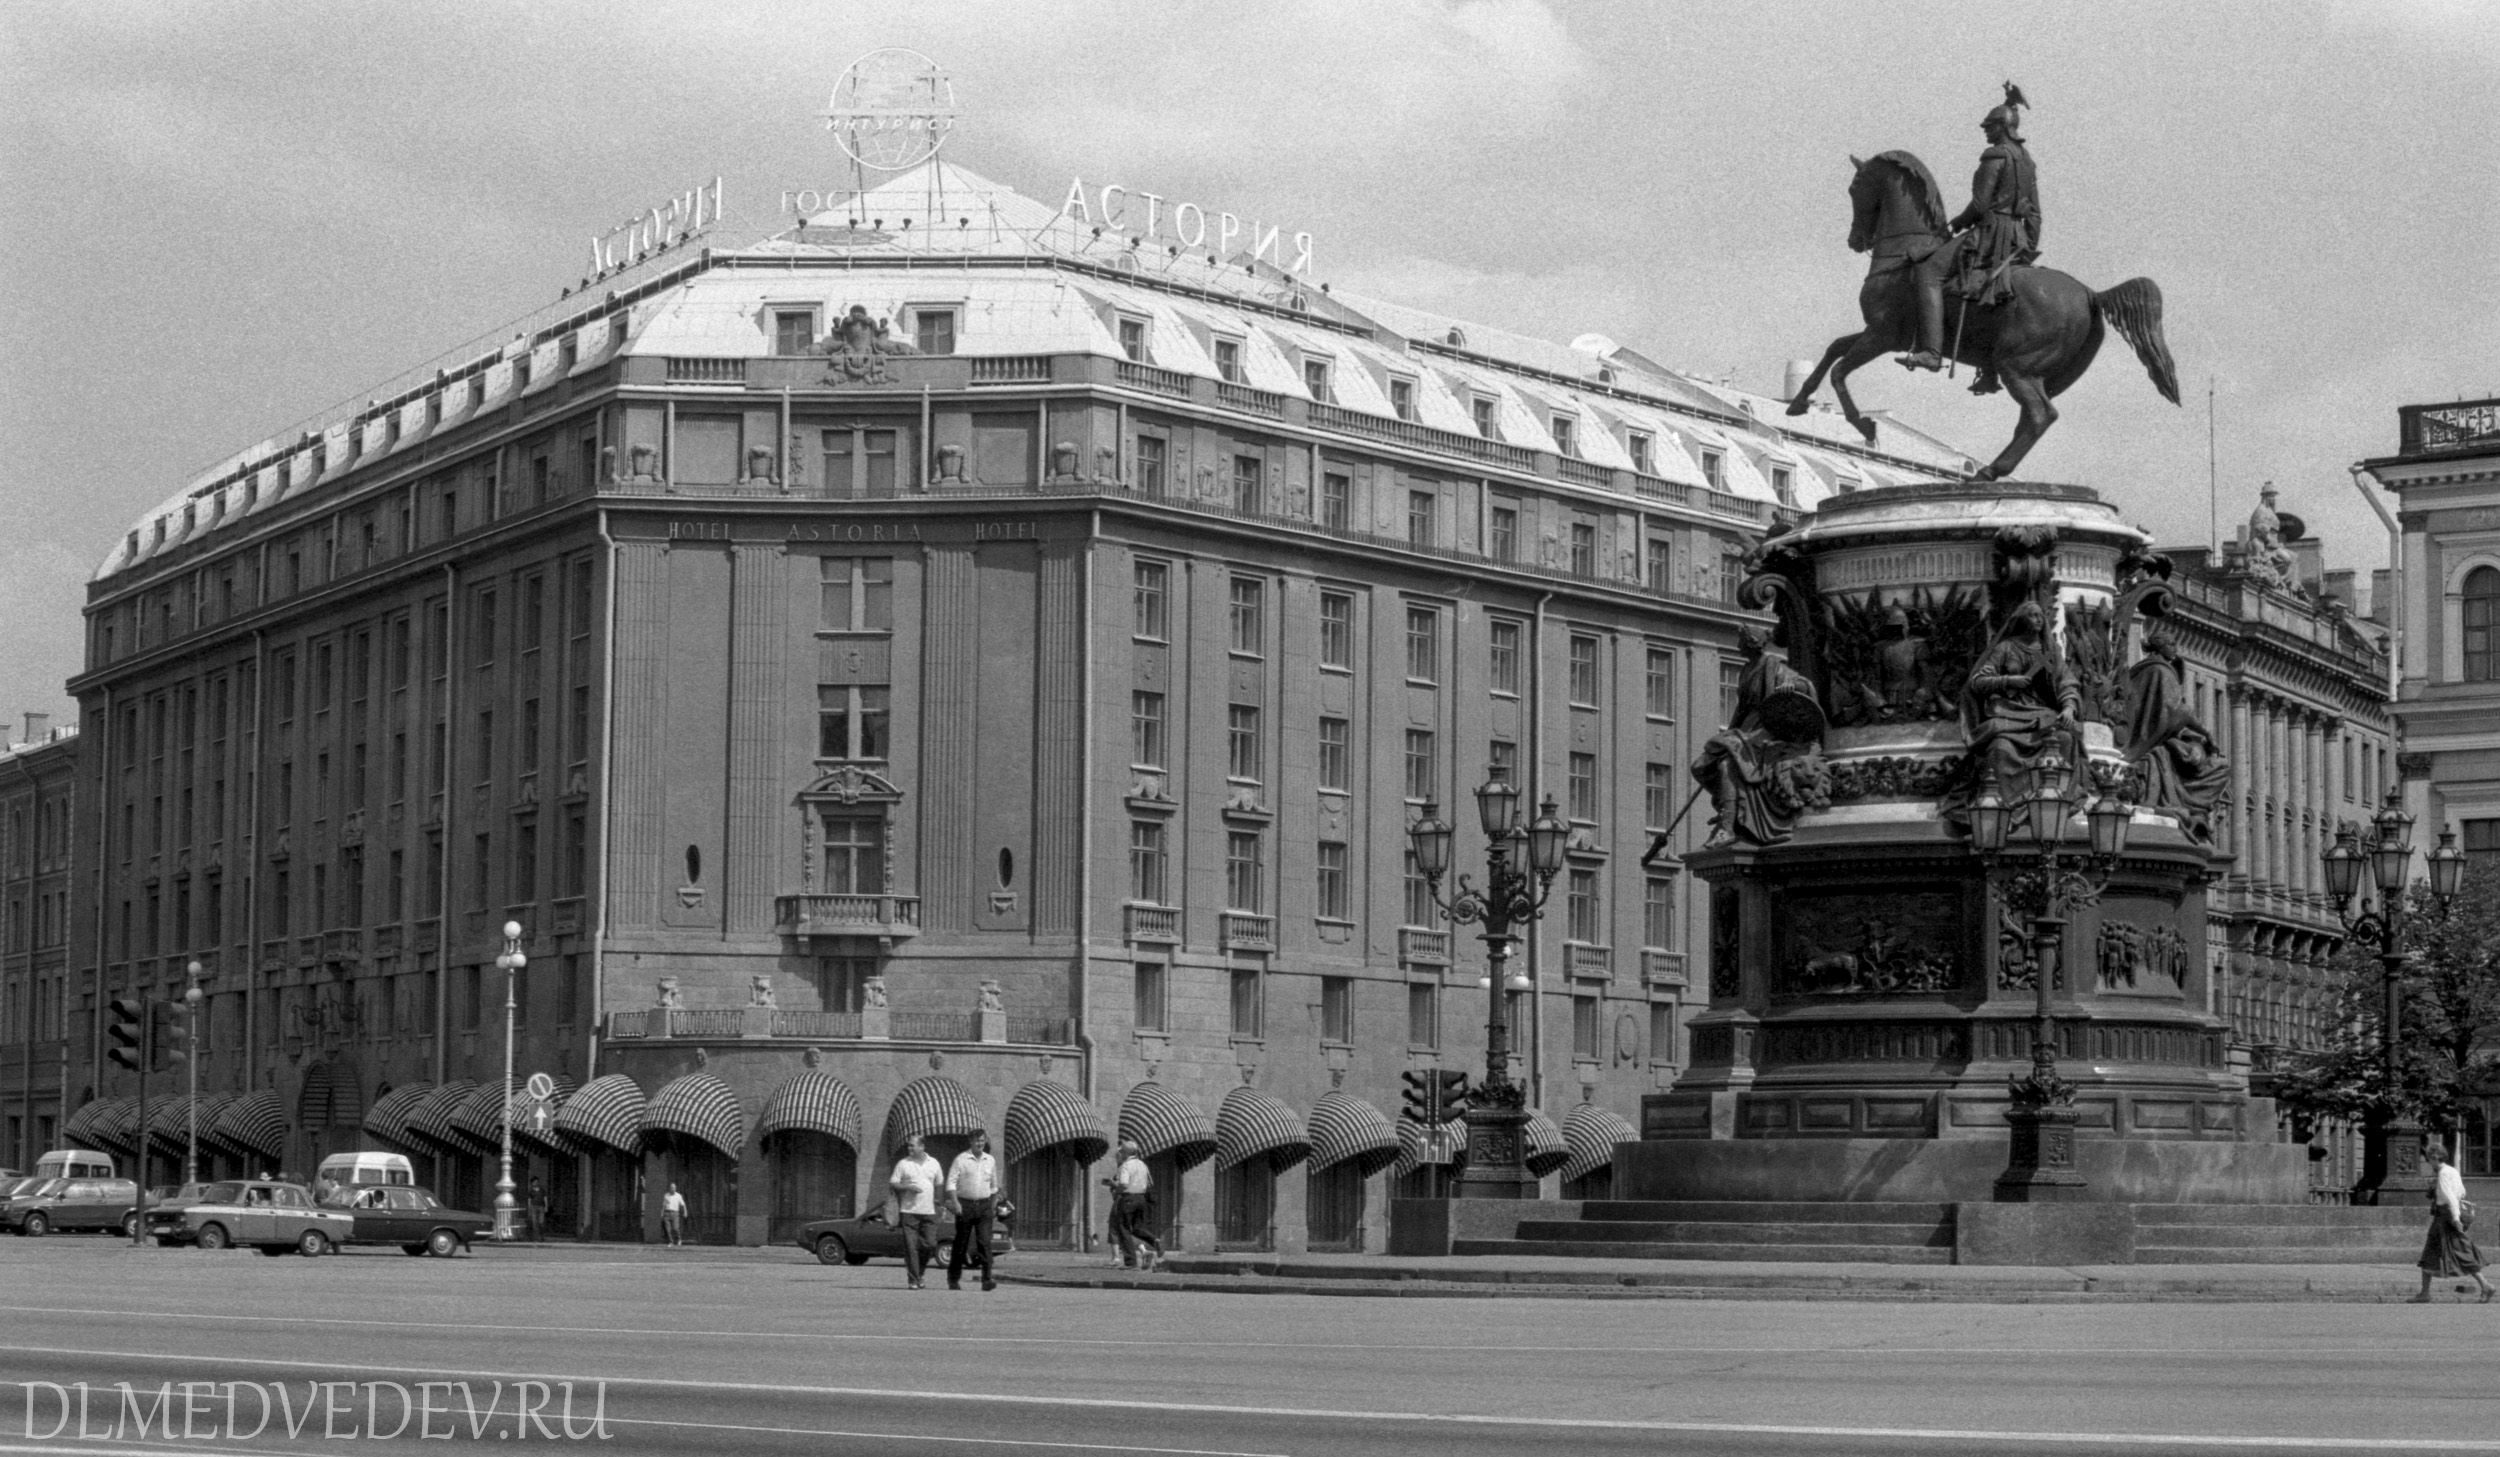 Гостиница «Астория» Ленинград, июль 1991 года, фото Льва Медведева